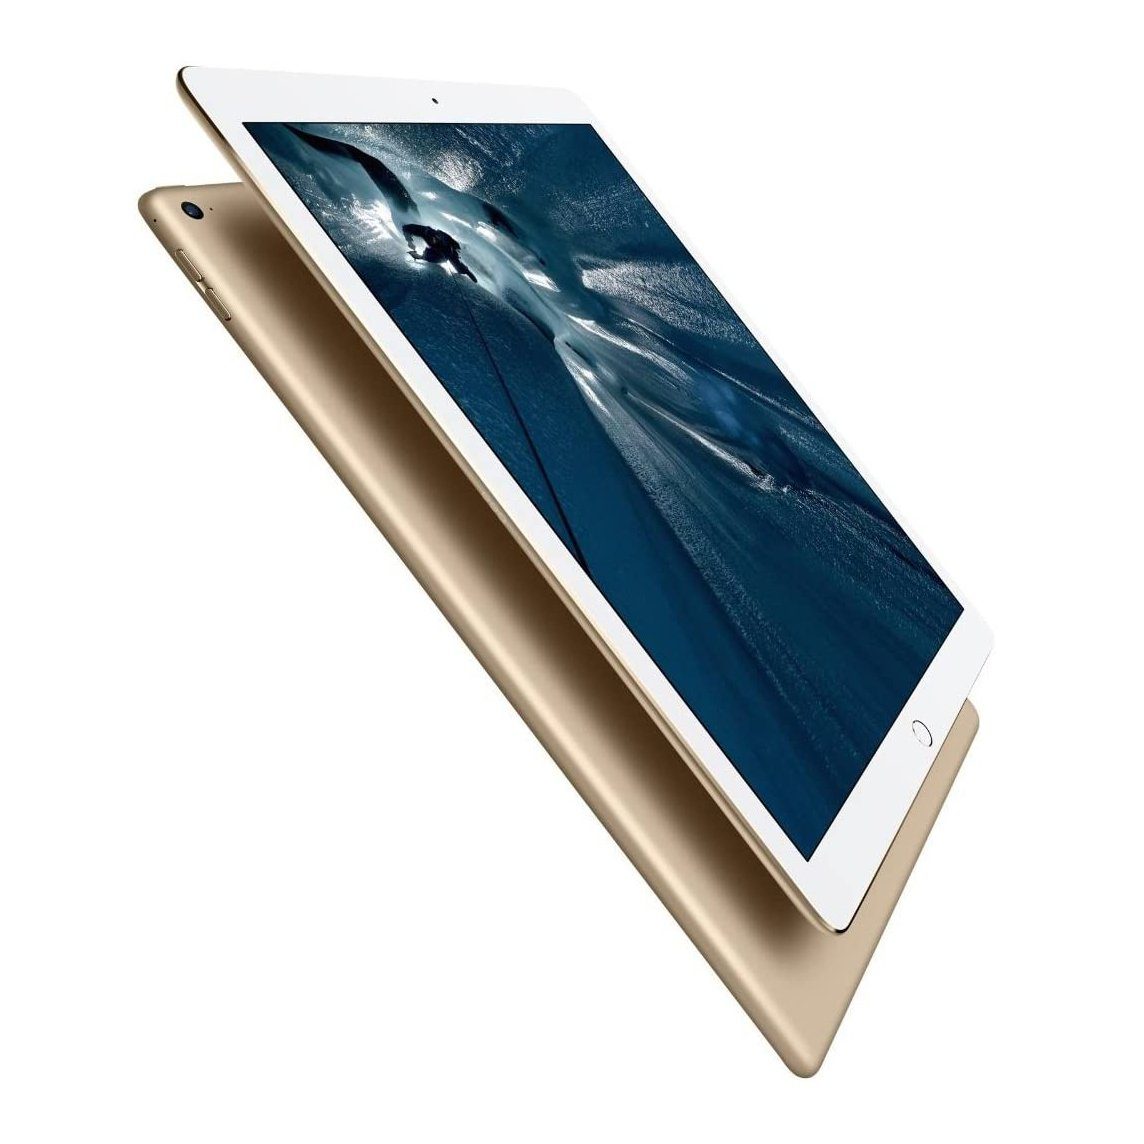 Apple iPad Pro 9.7 Tablet Wi-Fi (Refurbished)